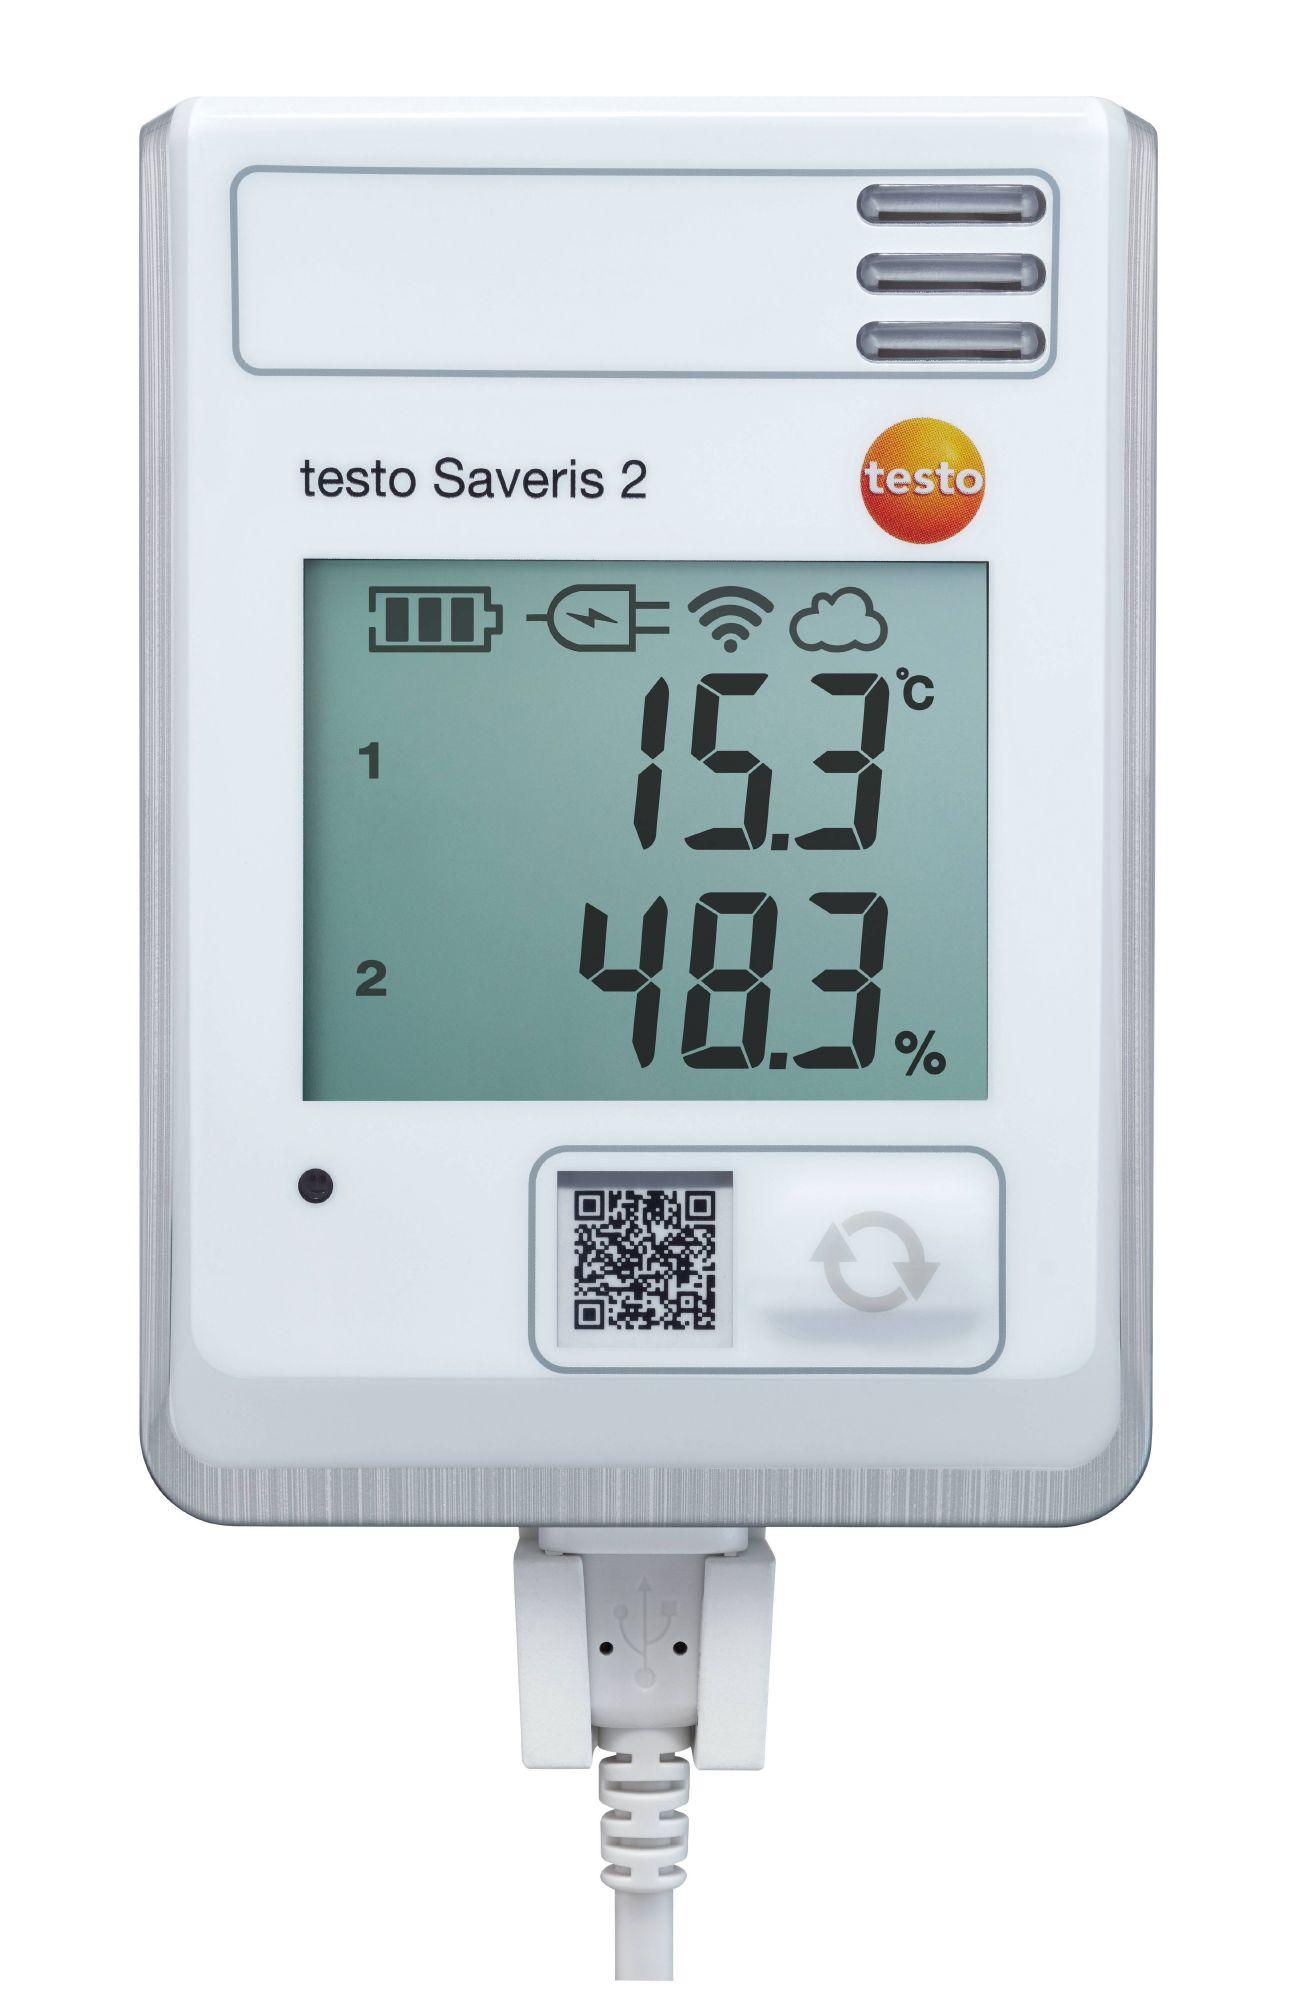 testo Saveris 2-H1 – WiFi data logger with display and integrated temperature and humidity probe (testo Saveris 2-H1)